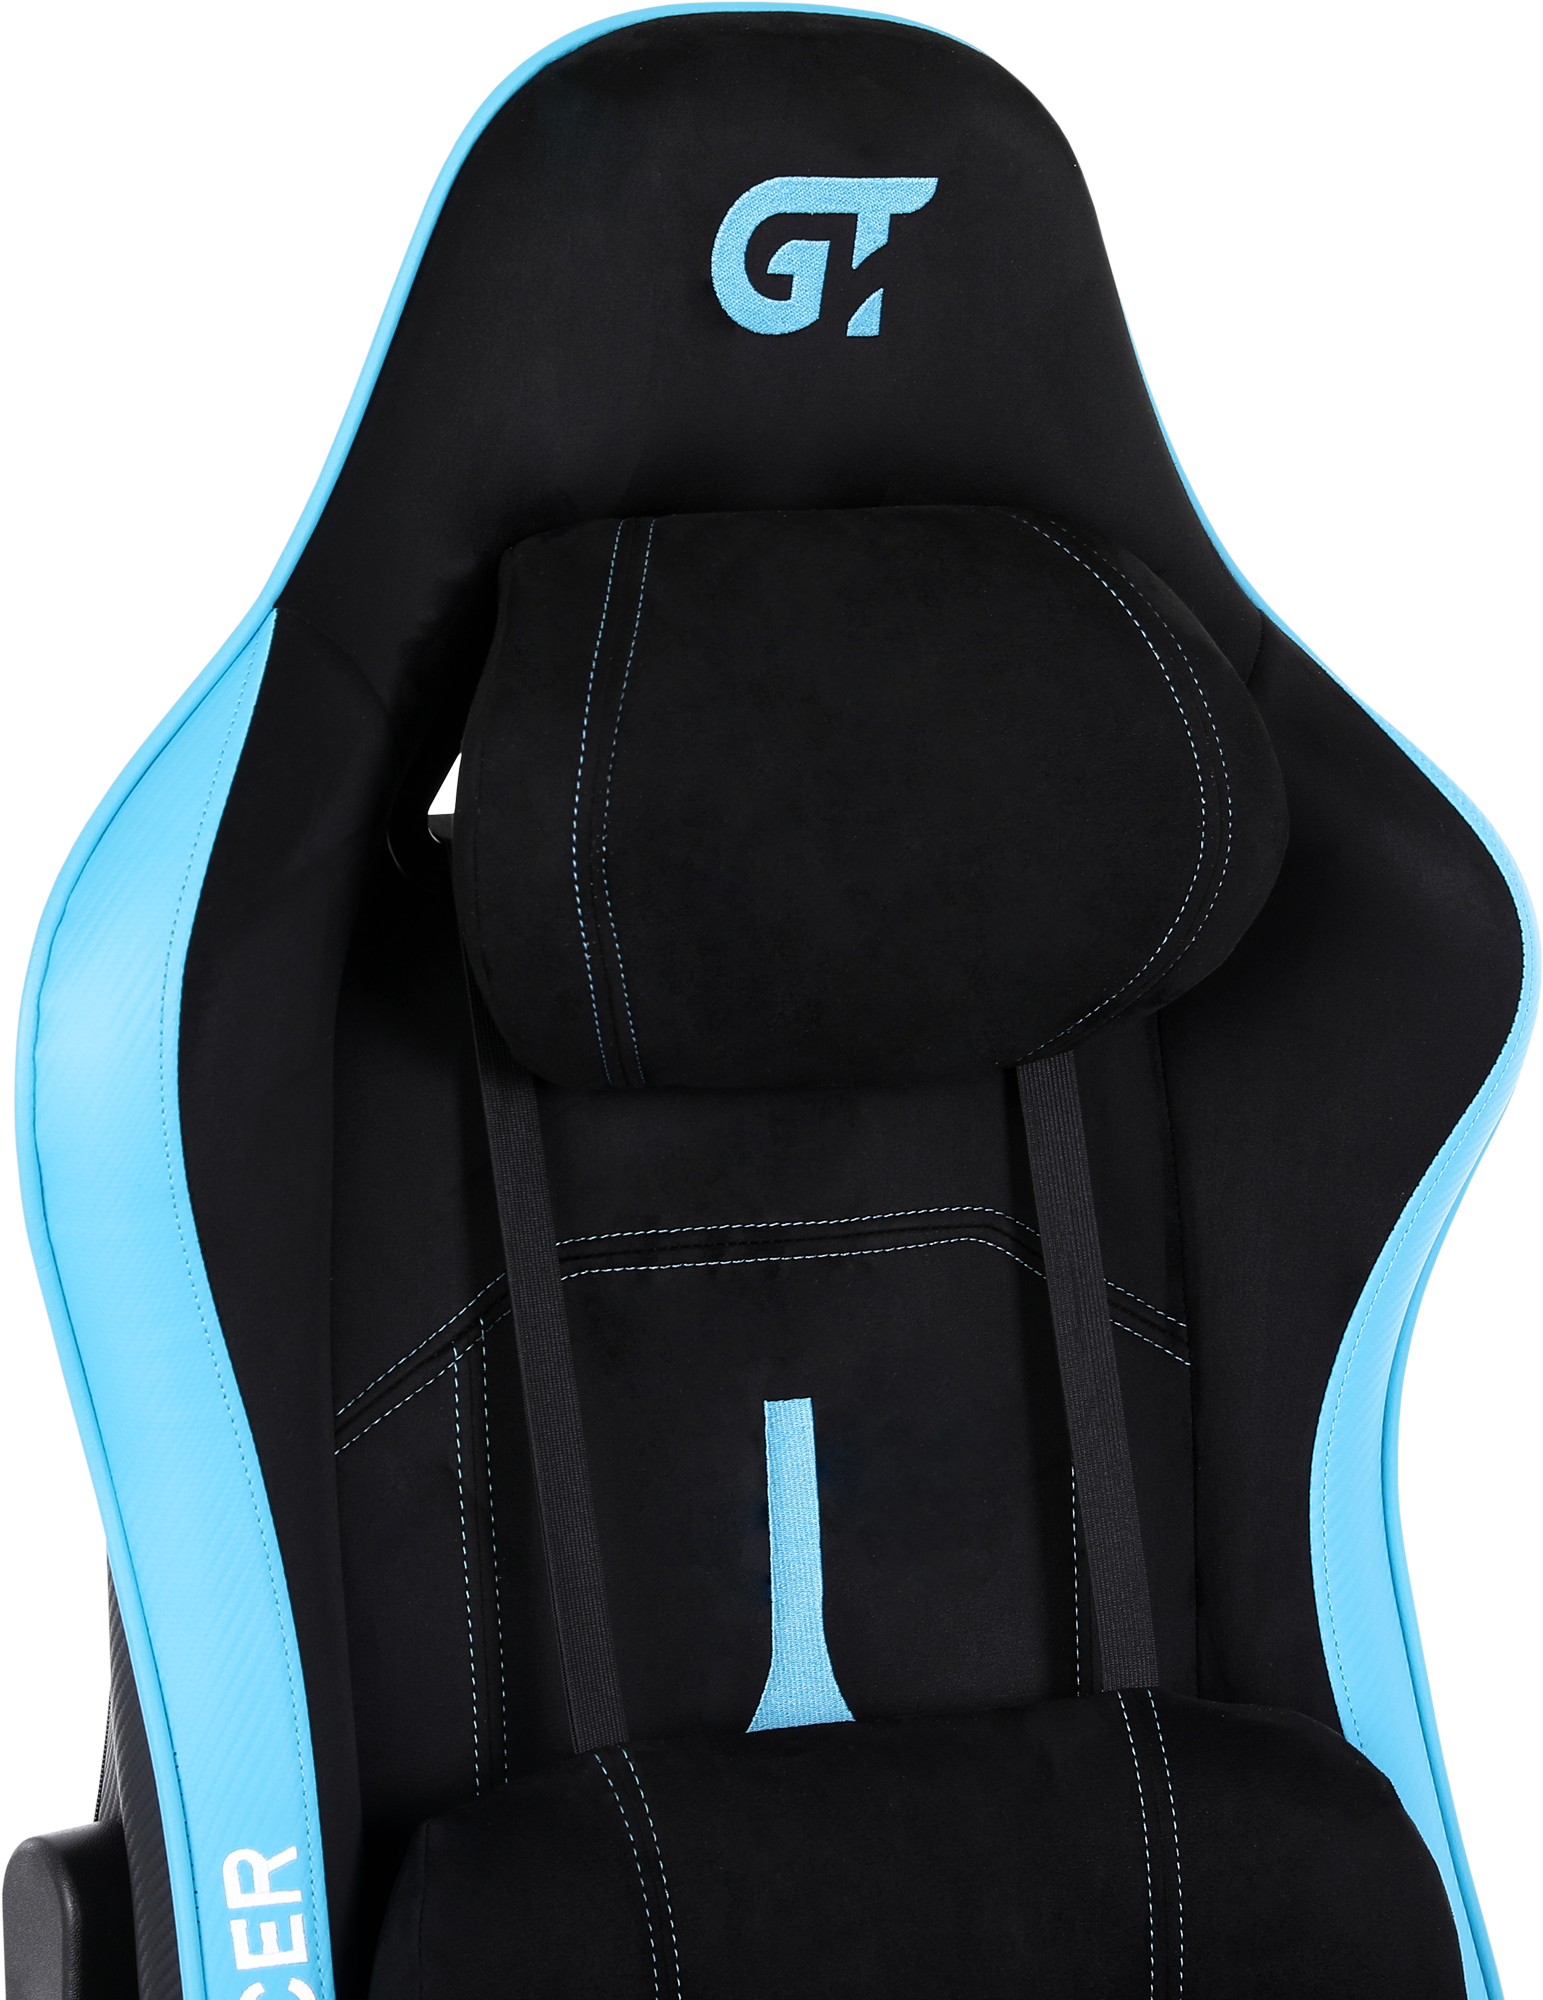 Геймерське крісло GT Racer чорне із синім (X-2565 Black/Blue) - фото 8